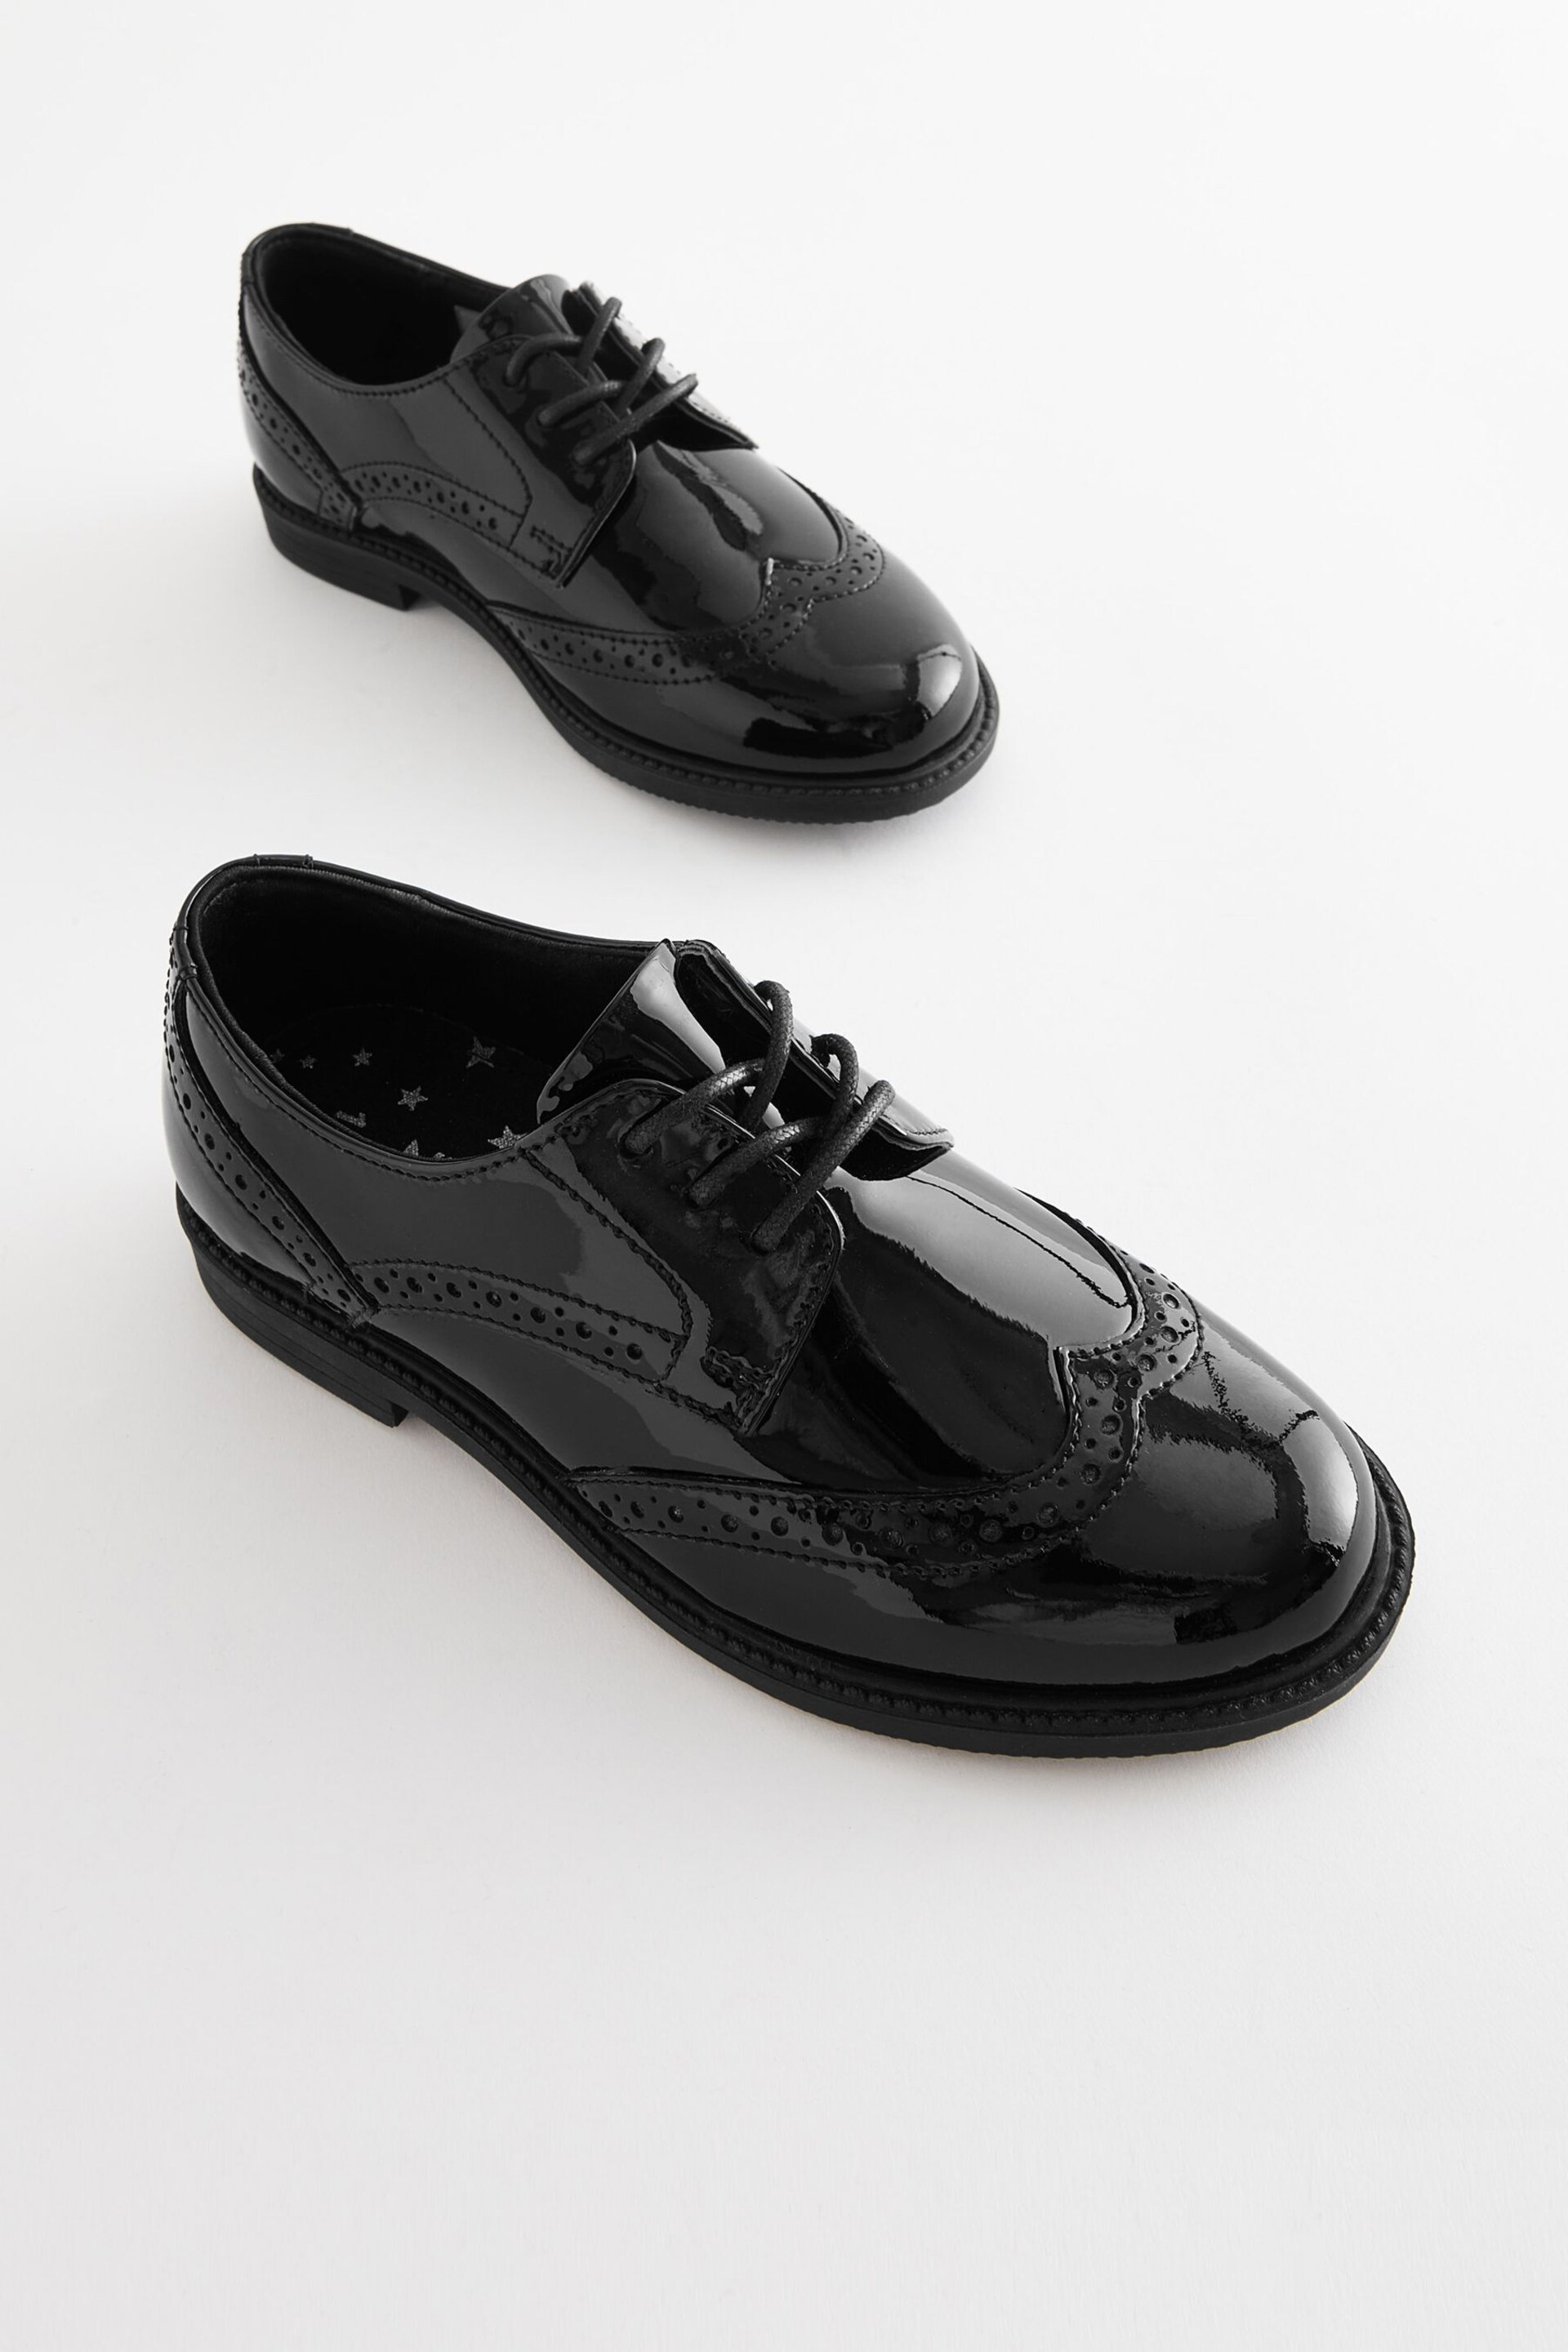 Black Patent School Lace-Up Brogue Detail Shoes - Image 4 of 6